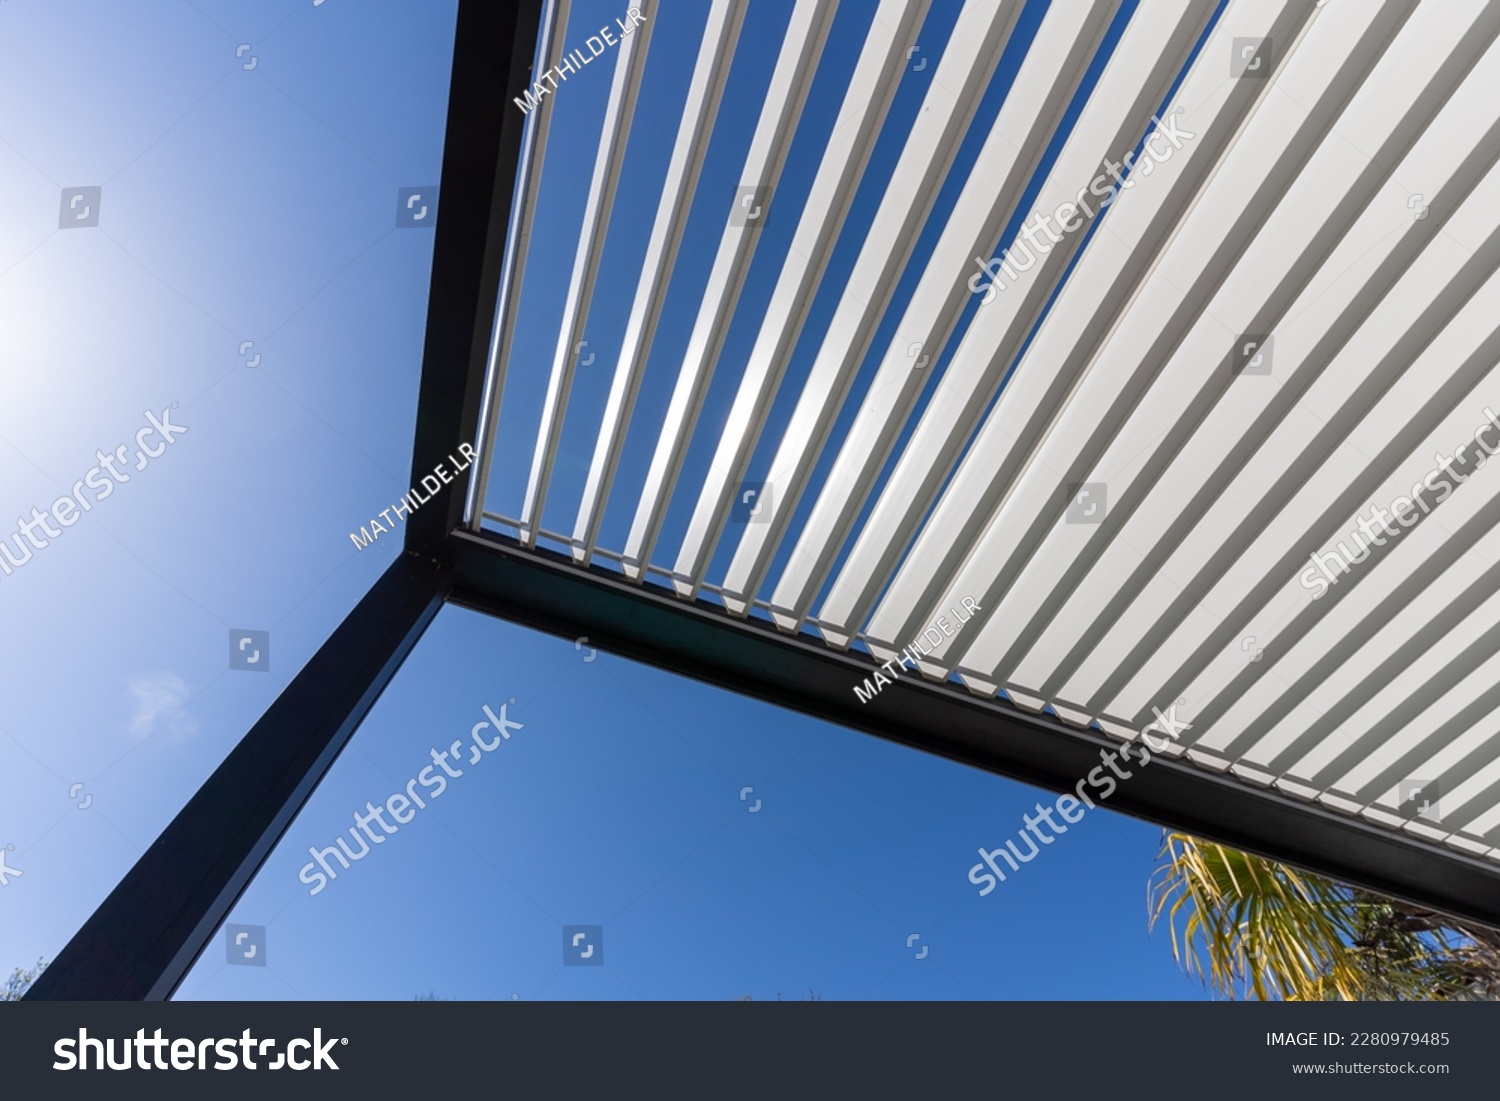 Aluminum pergola for outdoor patio against clear blue sky. Bottom view #2280979485